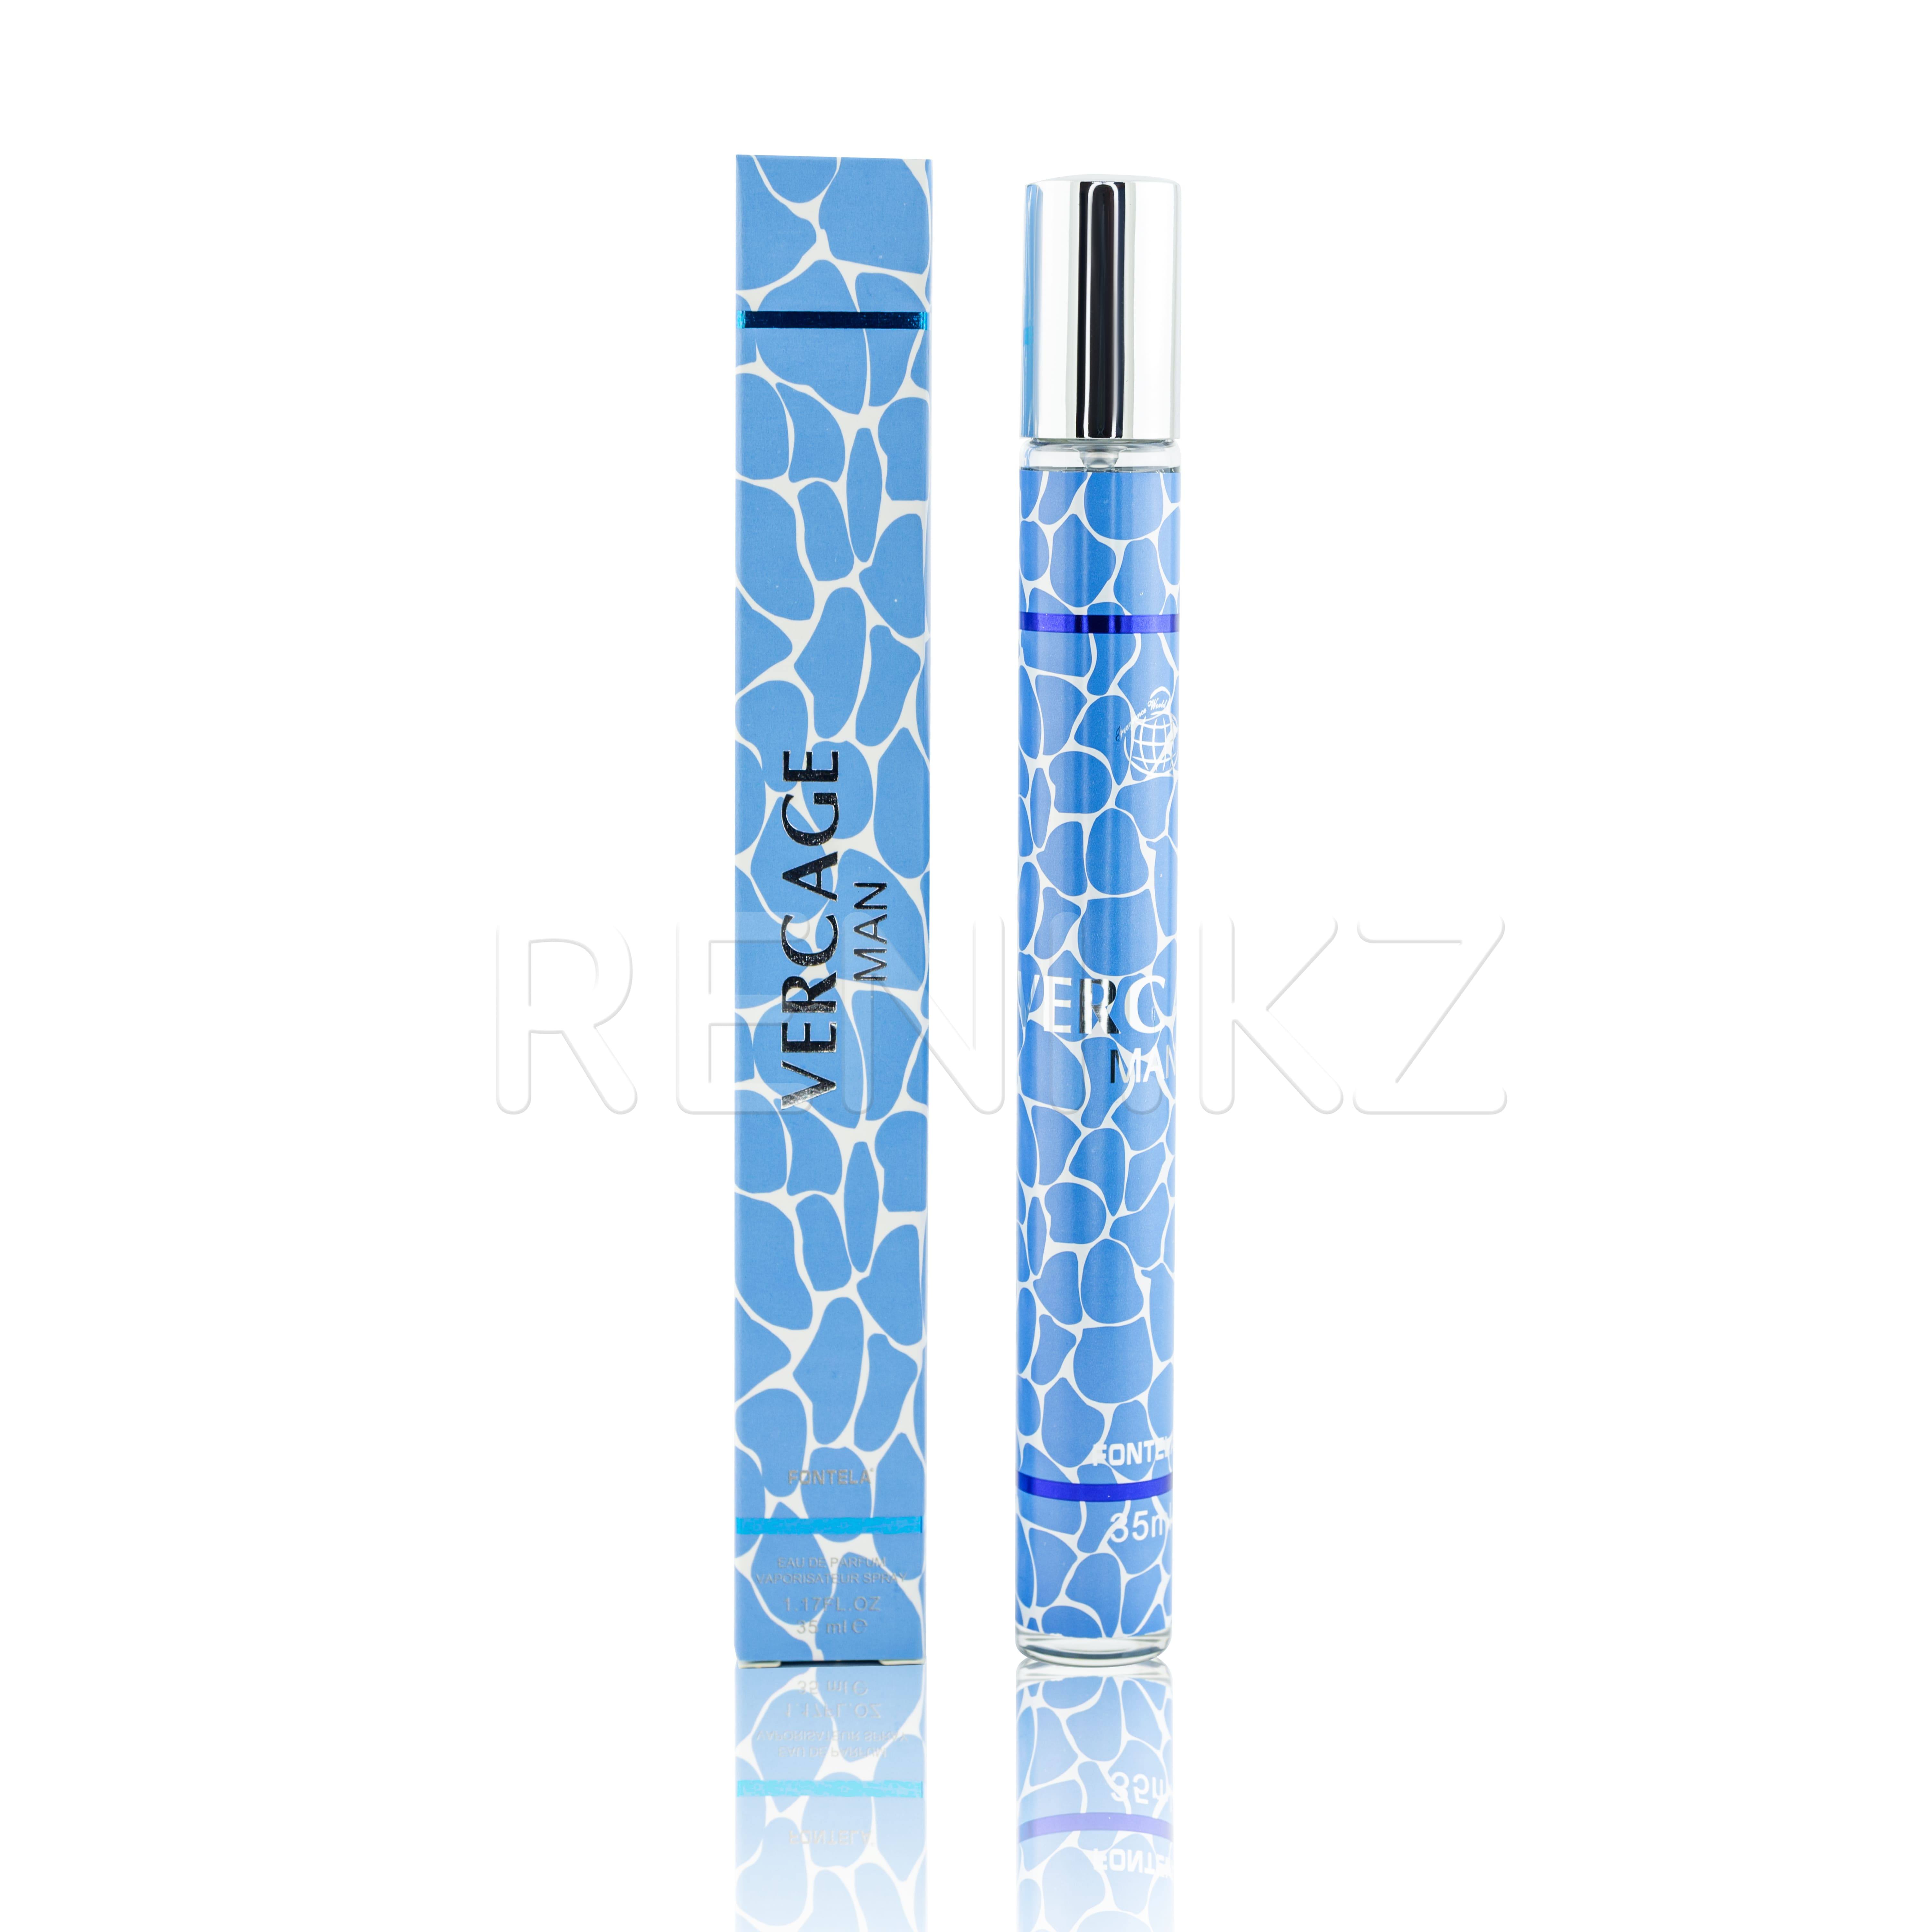 05 Парфюмерная вода Vercage man (голубой), ручка 35 мл